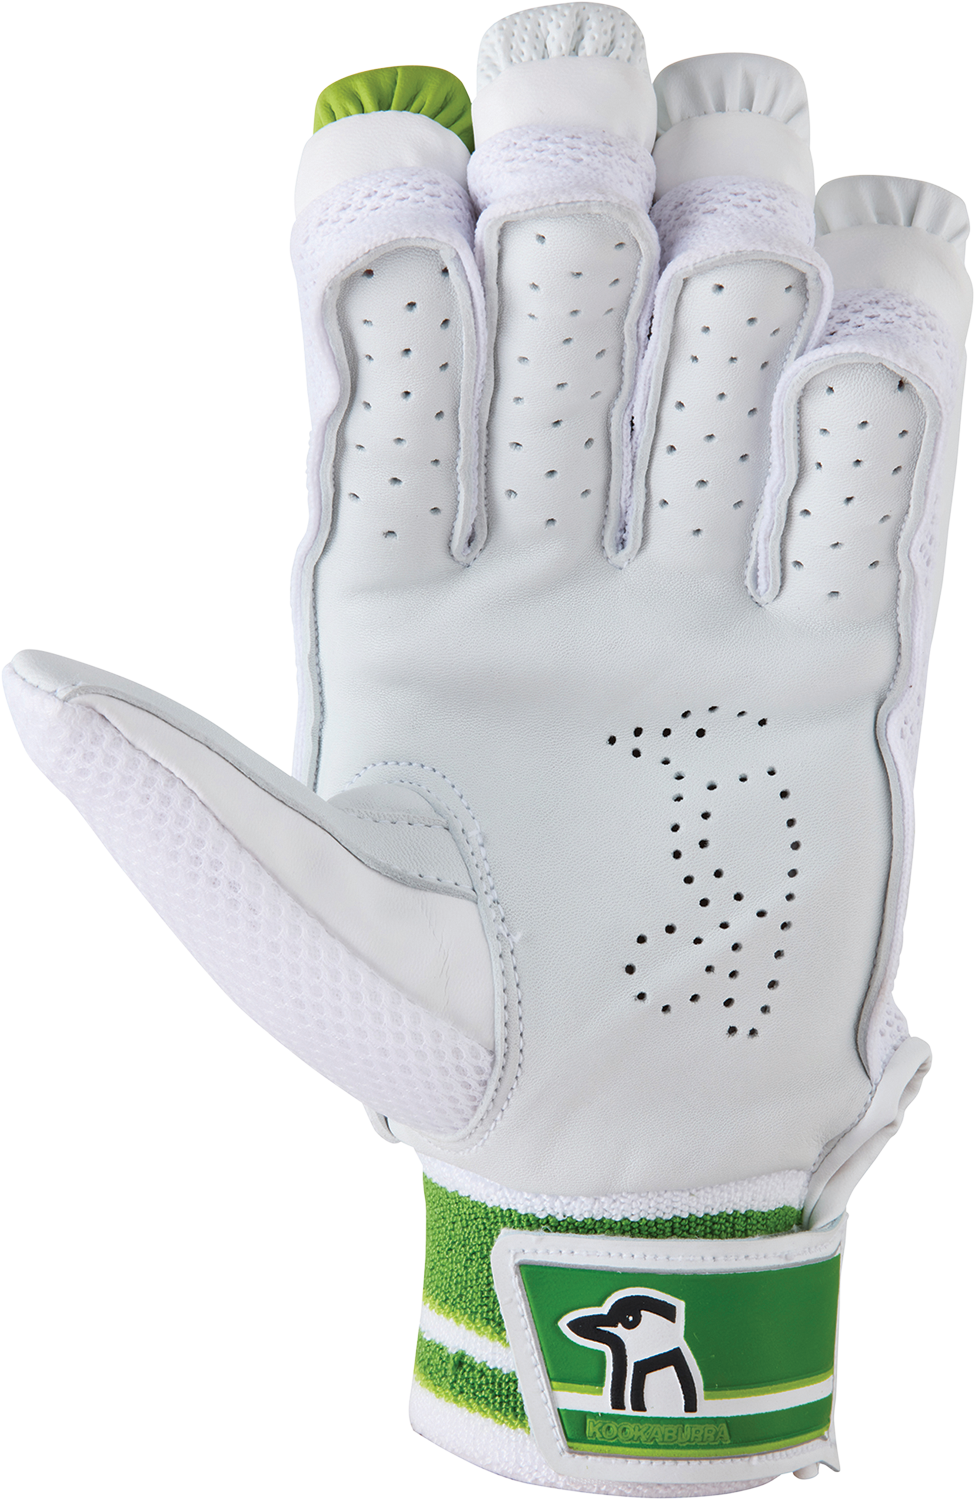 Kookaburra Kahuna Pro 3.0 Cricket Batting Gloves